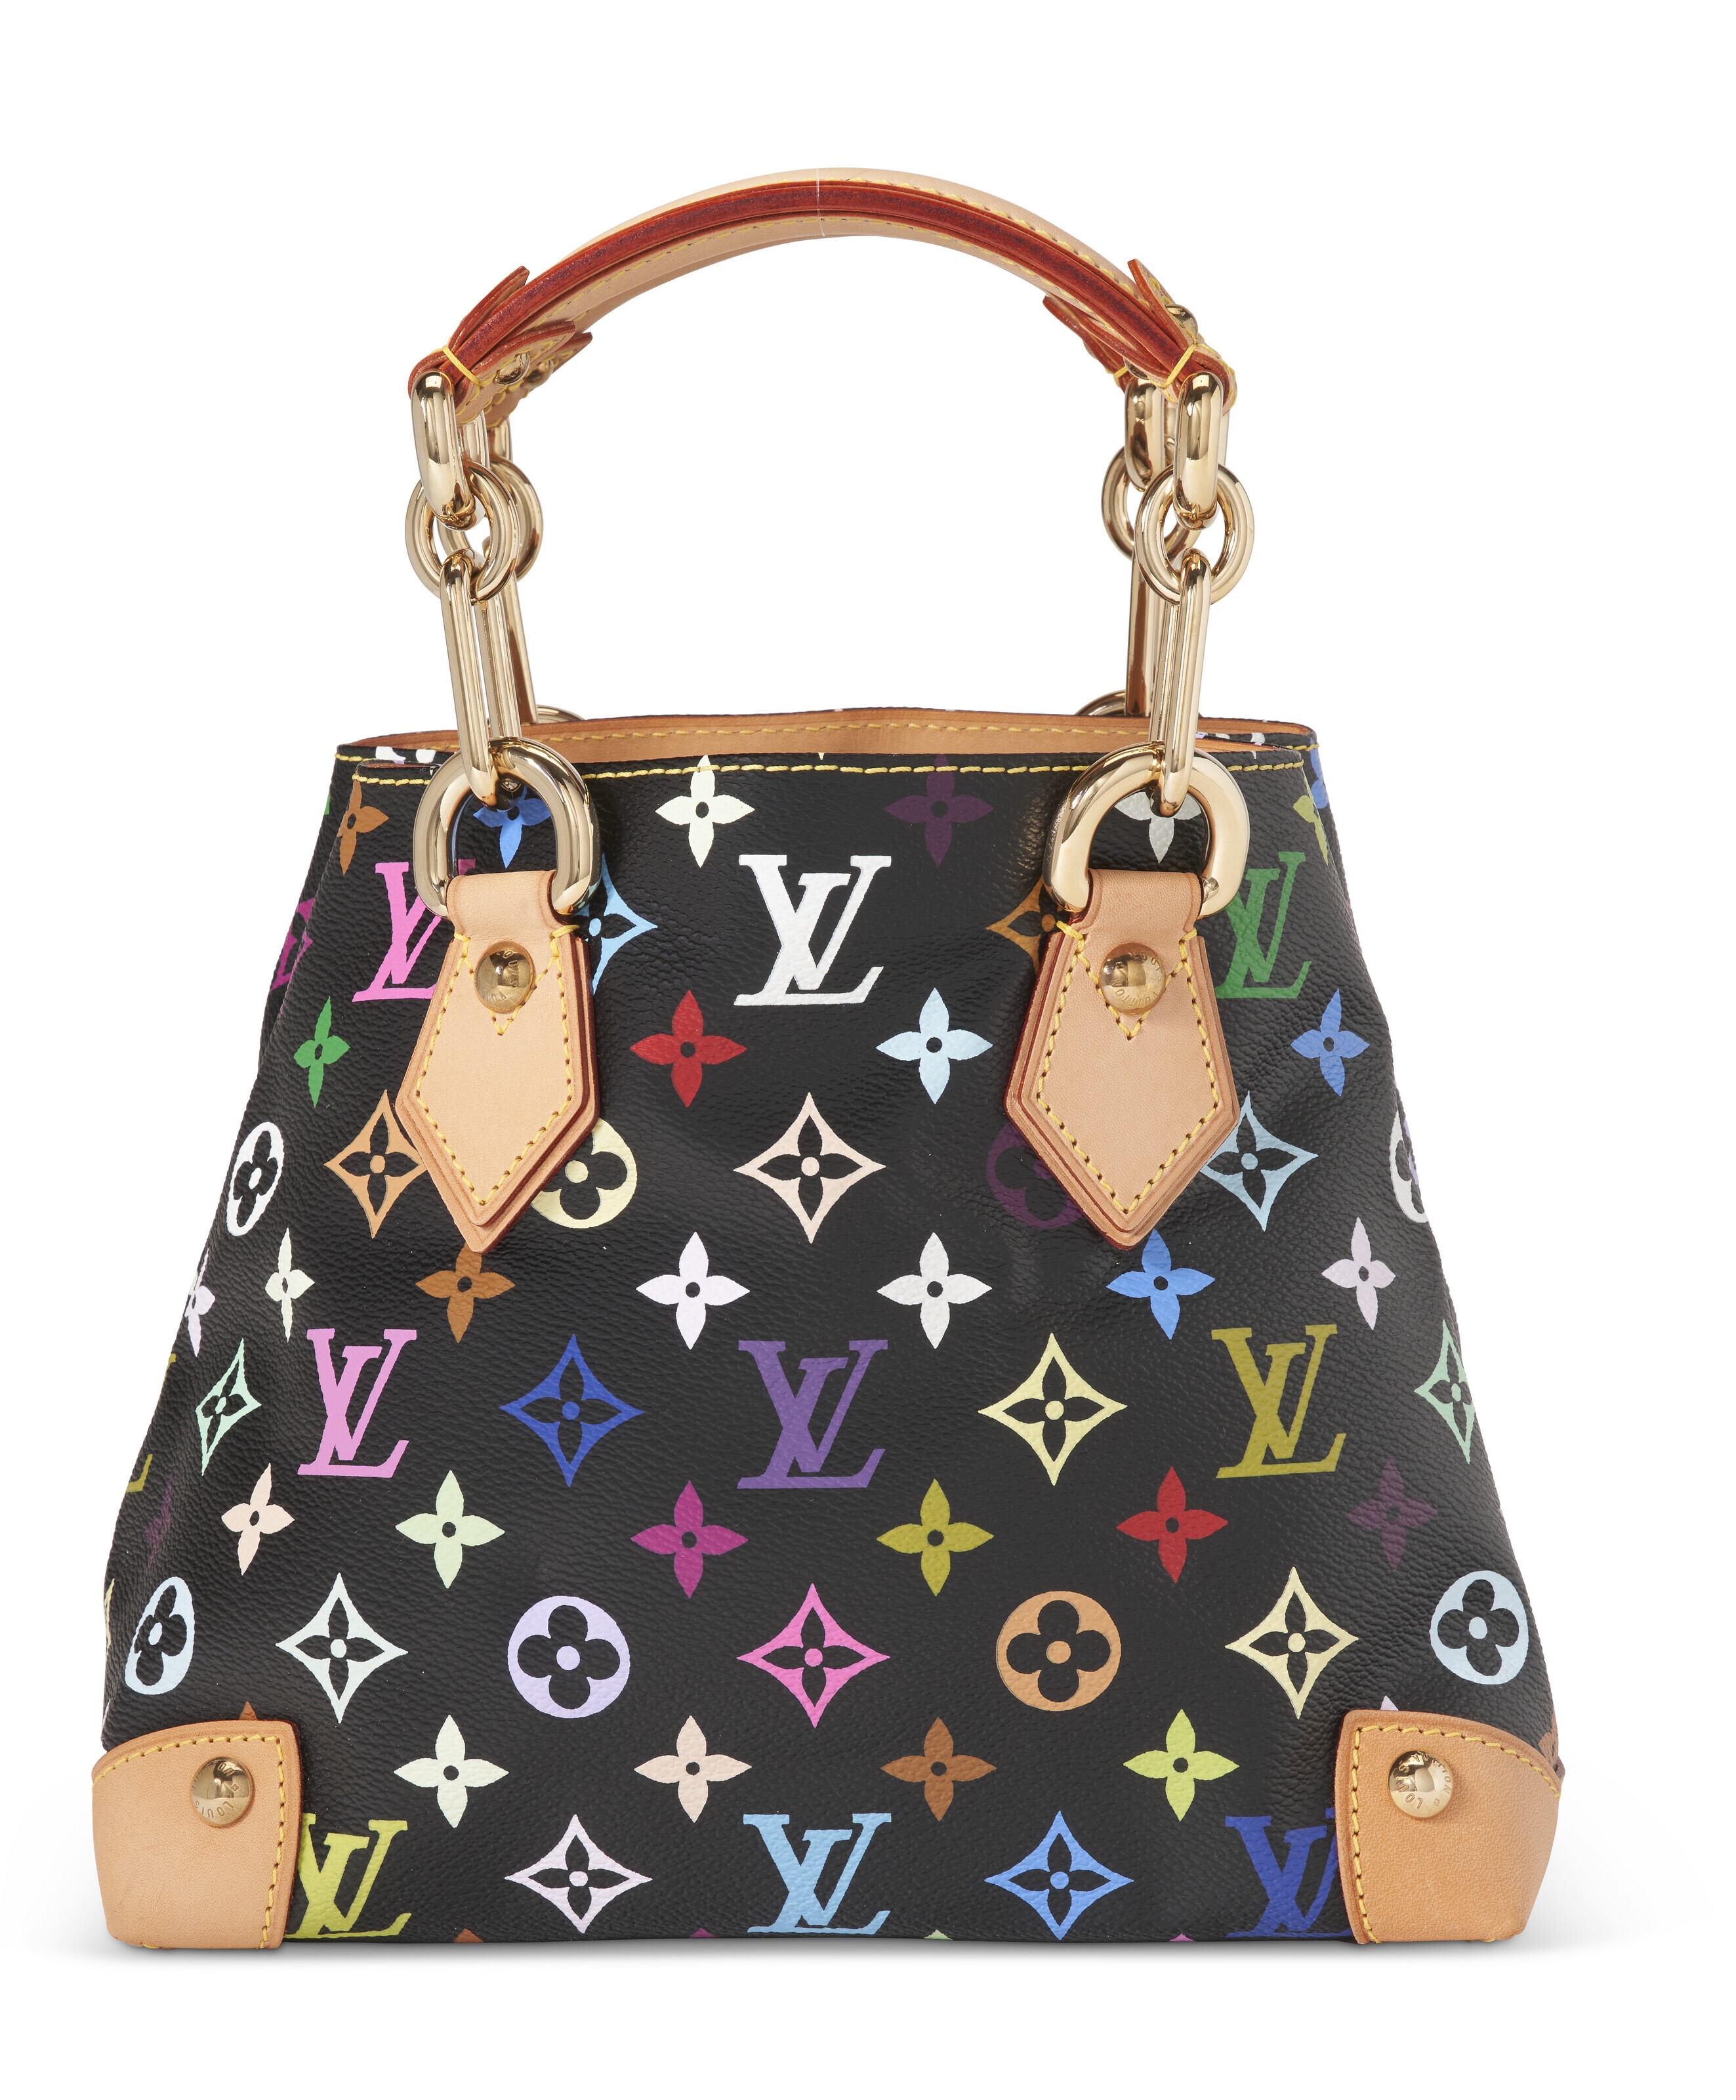 Sold at Auction: Louis Vuitton Audra Handbag